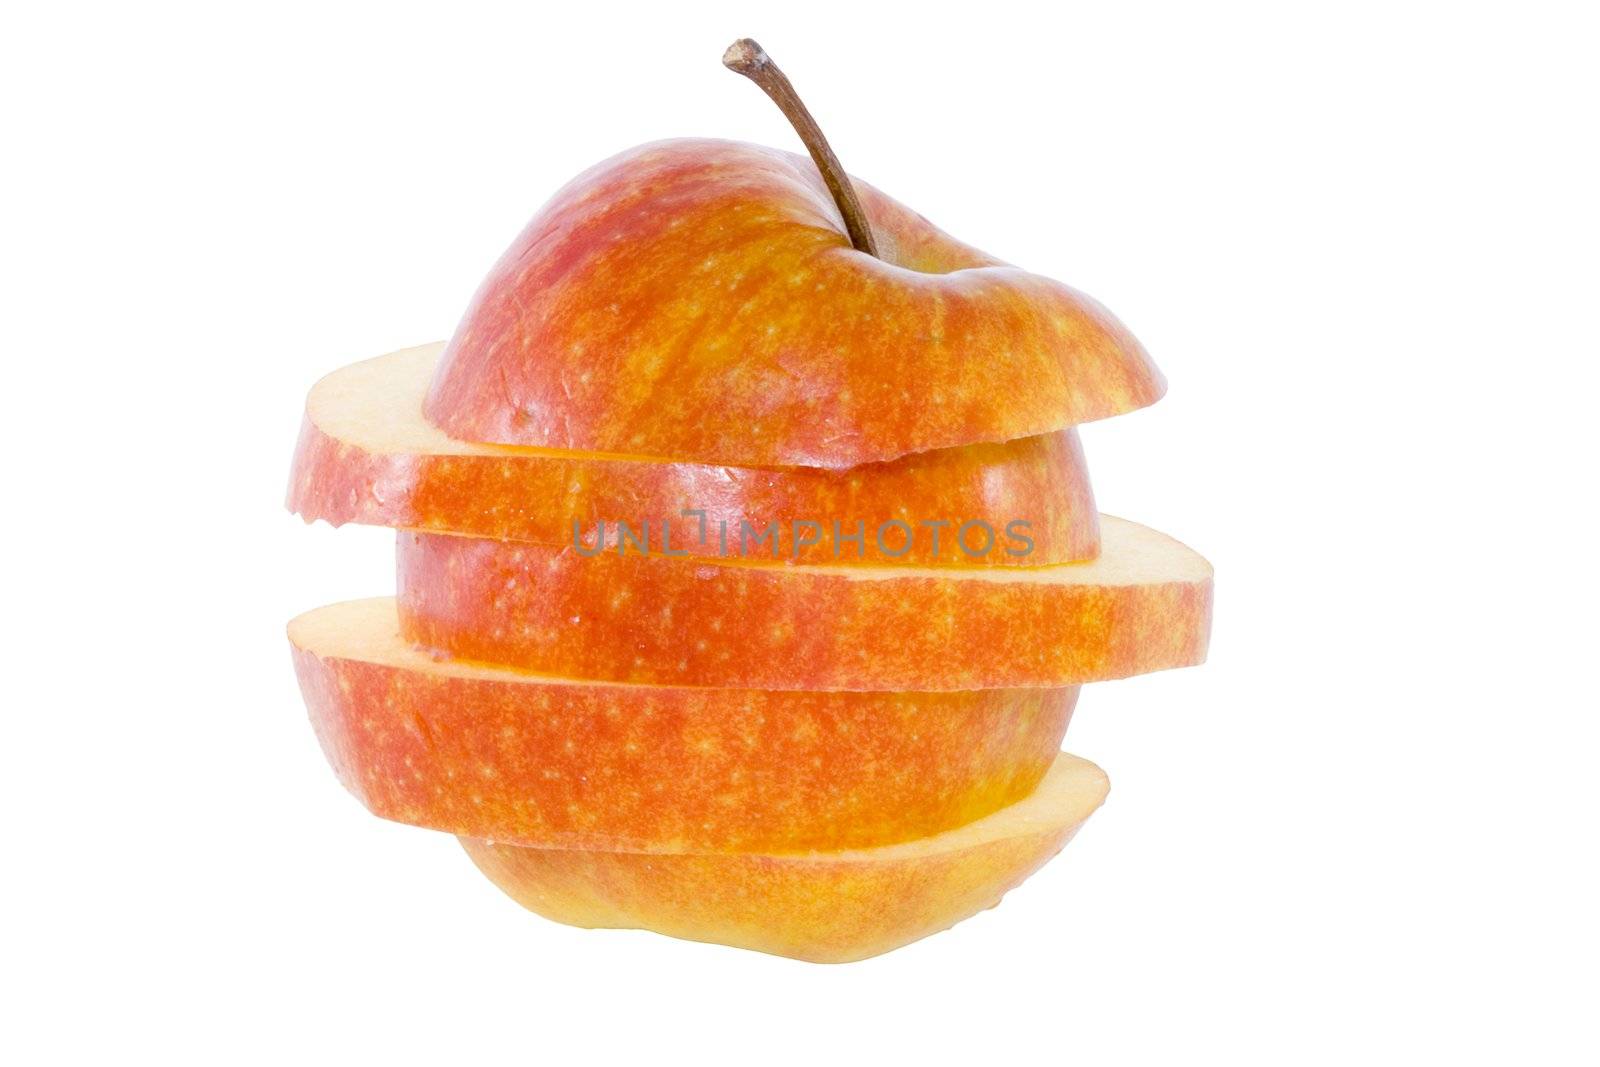 sliced apple - healthy eating - vegetables - close up